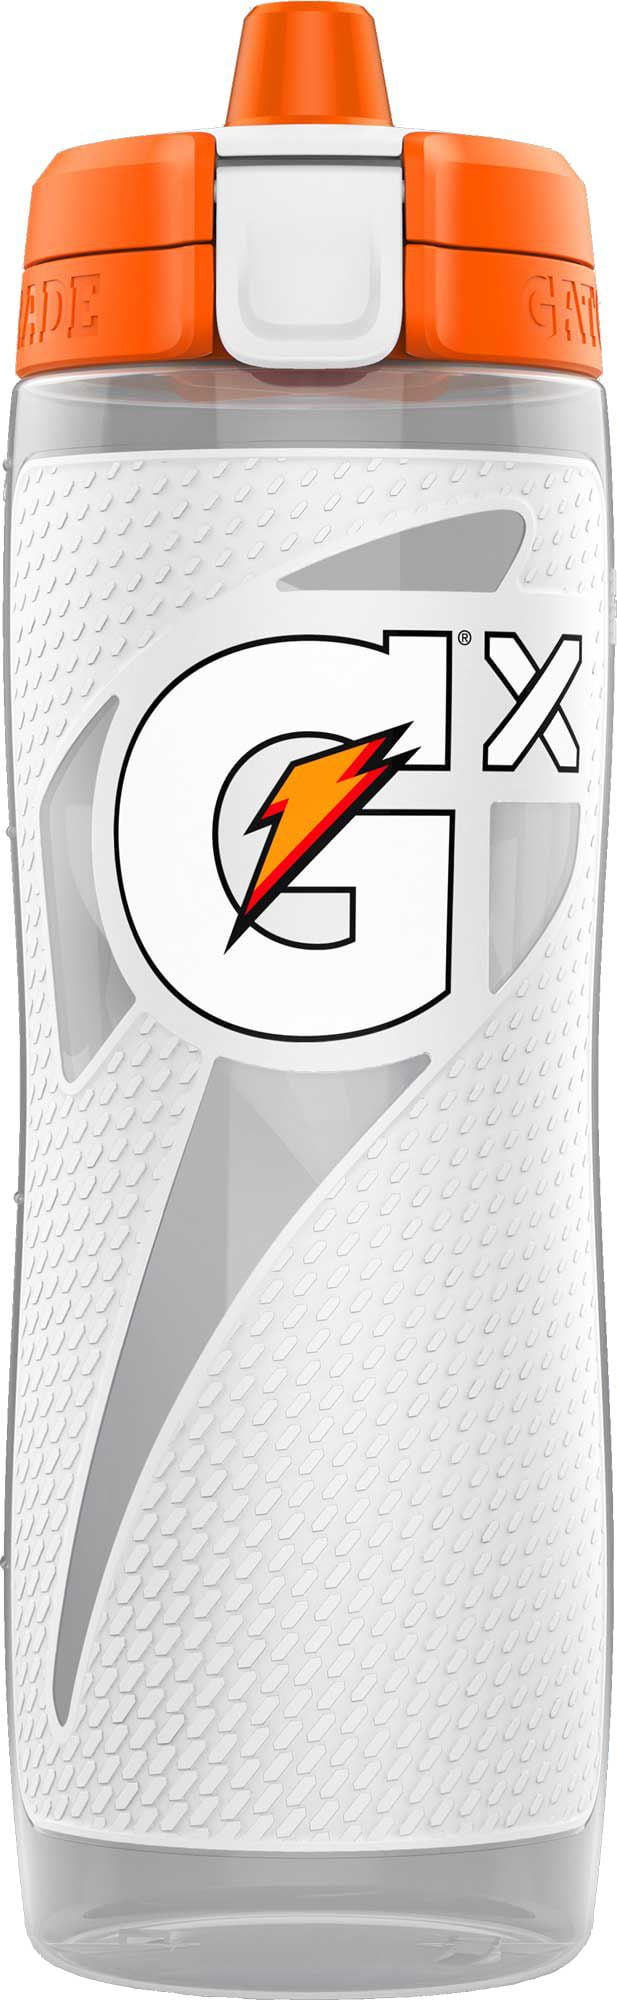 Gatorade Gx Hydration System, Non-Slip Gx Squeeze Bottles Neon Blue, 30 Oz